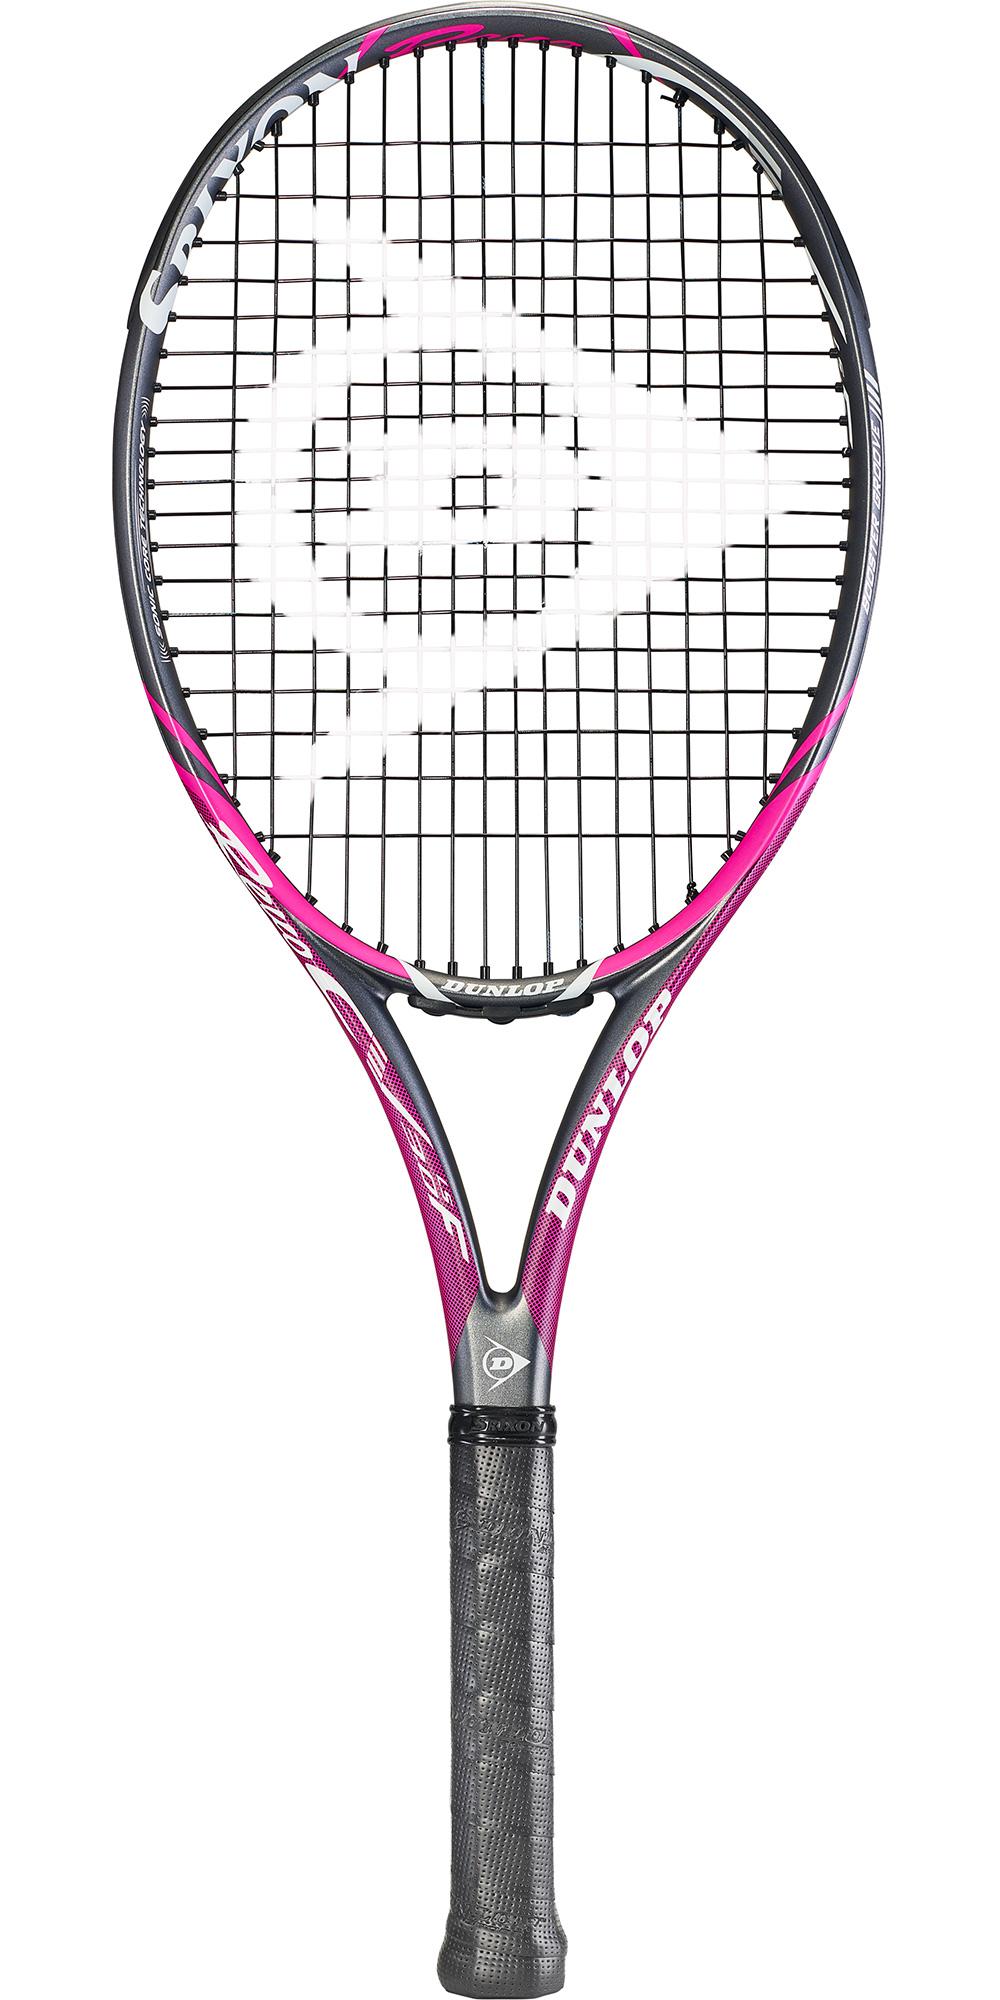 18Revo CV3.0 F-LS G1 Tennis Racket